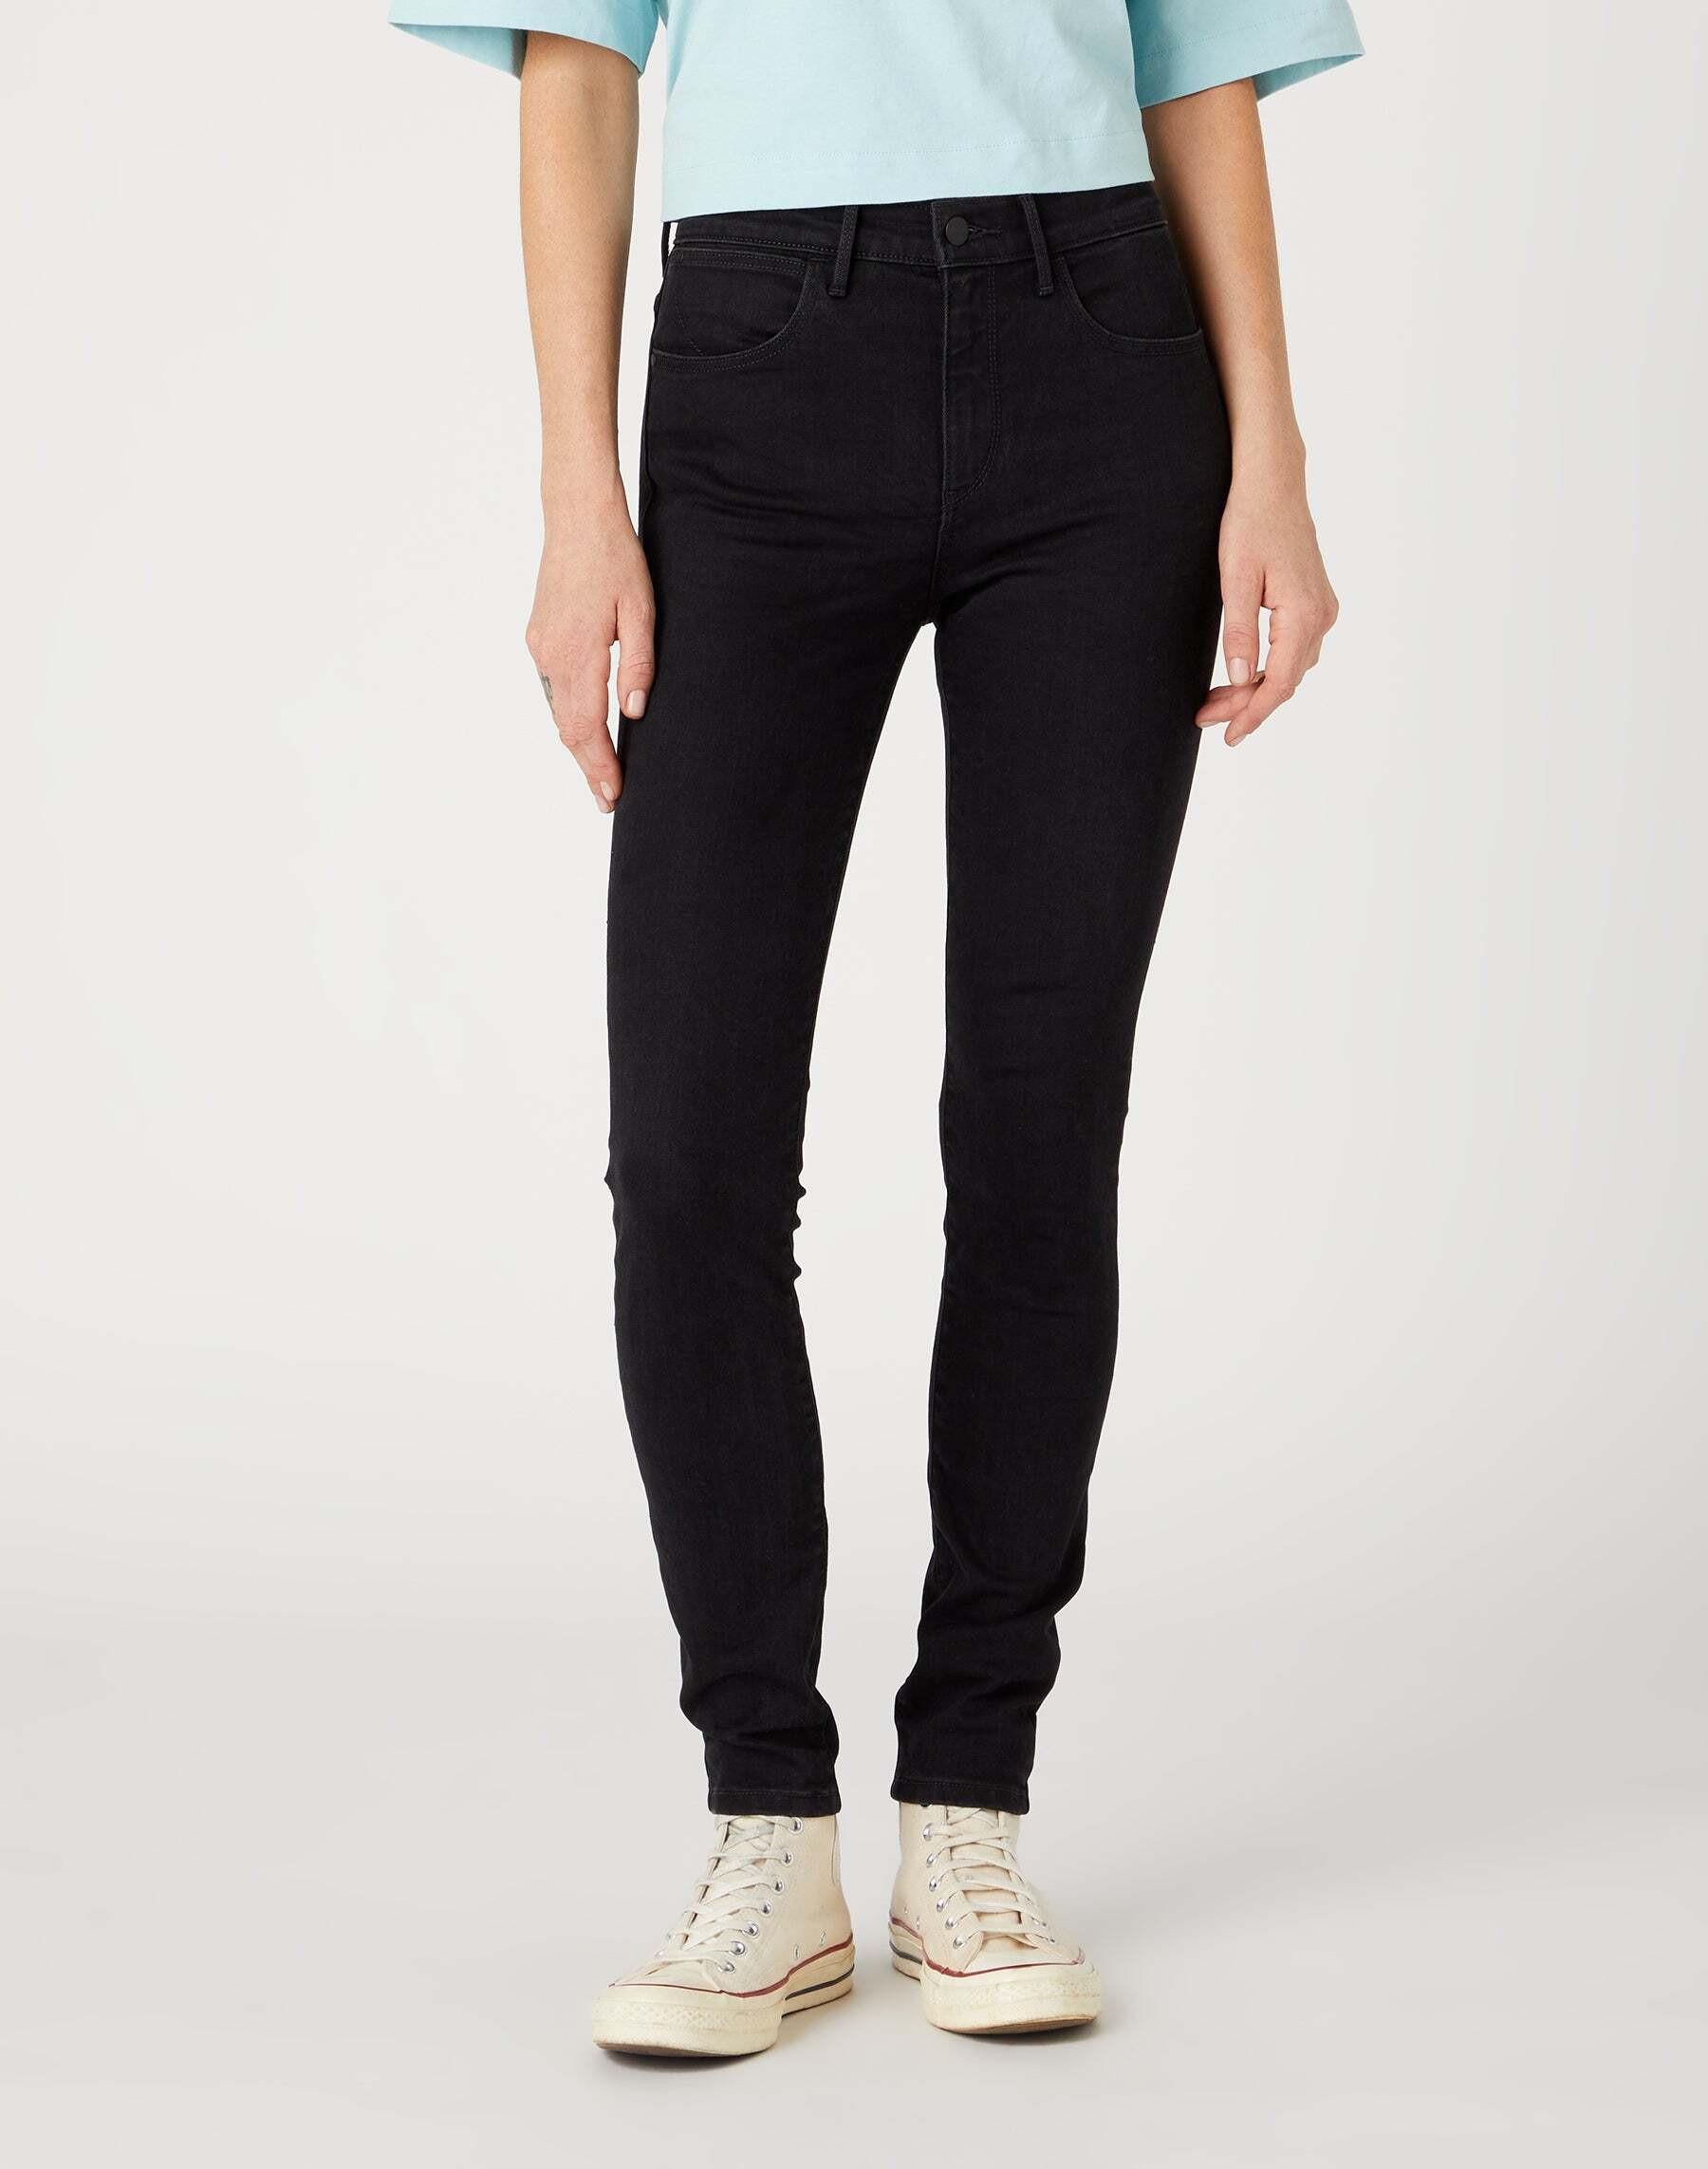 Jeans High Skinny Damen Schwarz L34/W28 von Wrangler